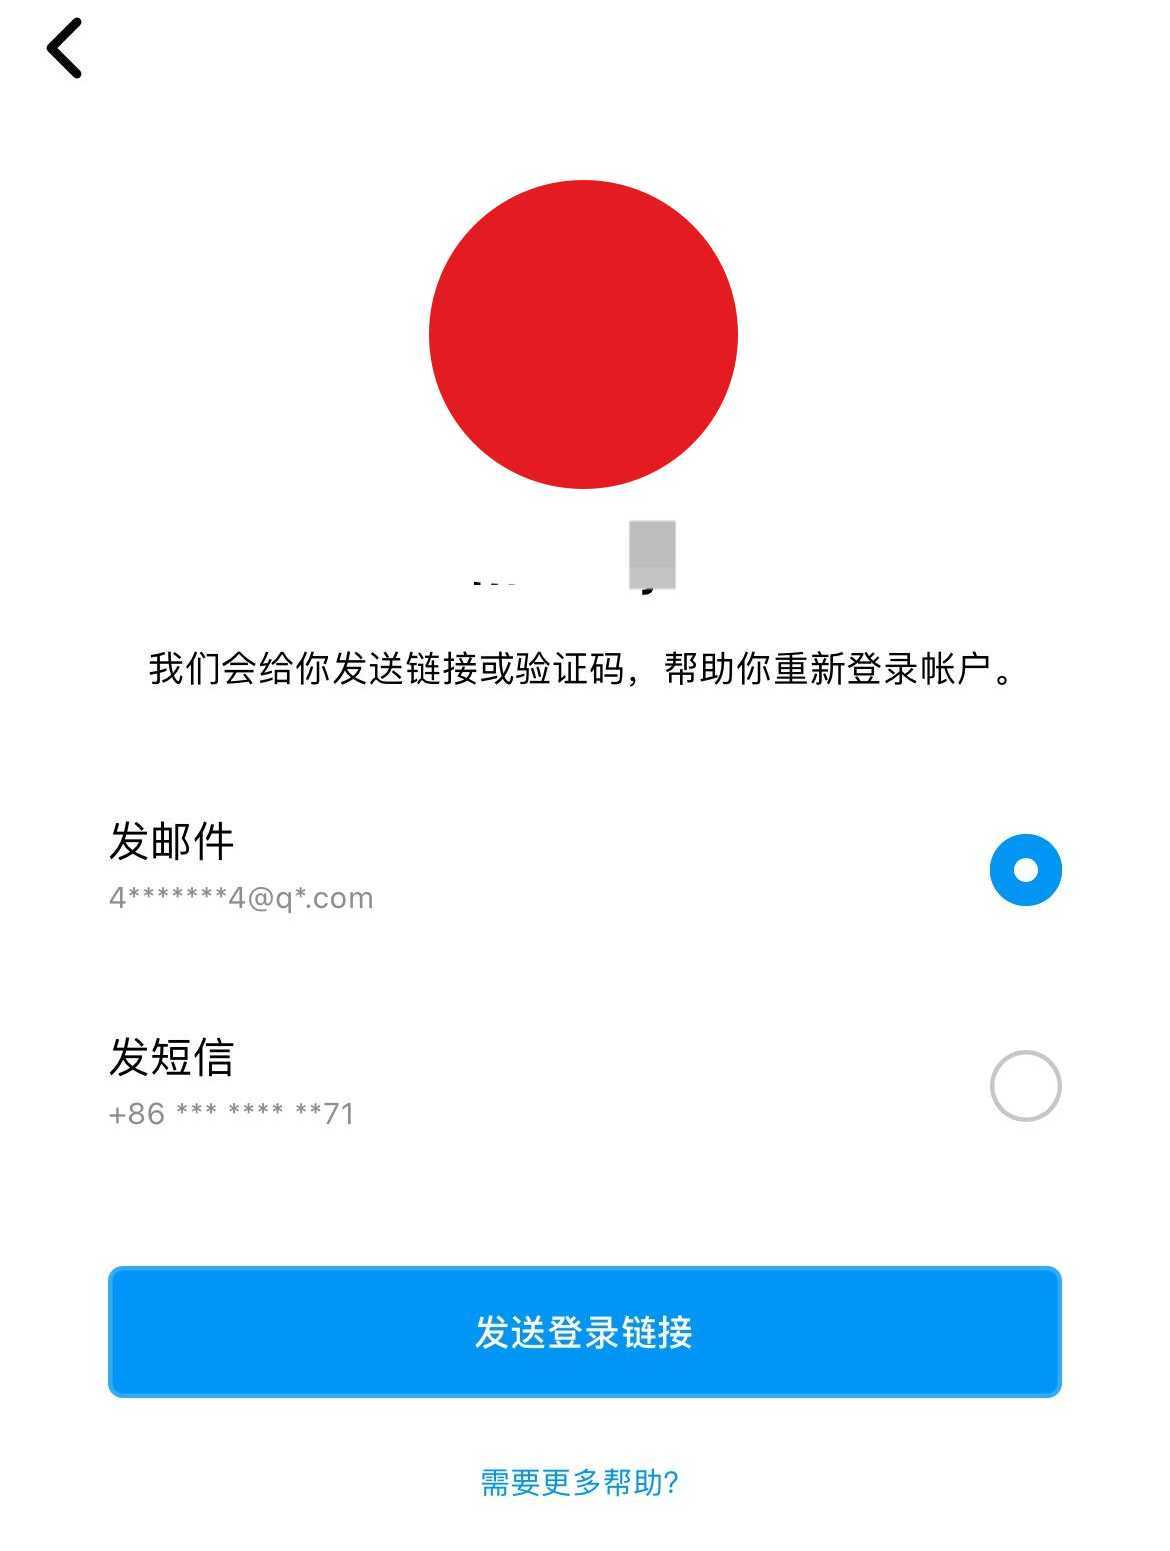 Instagram邮箱验证码无限循环收不到？用中国虚拟手机号接码